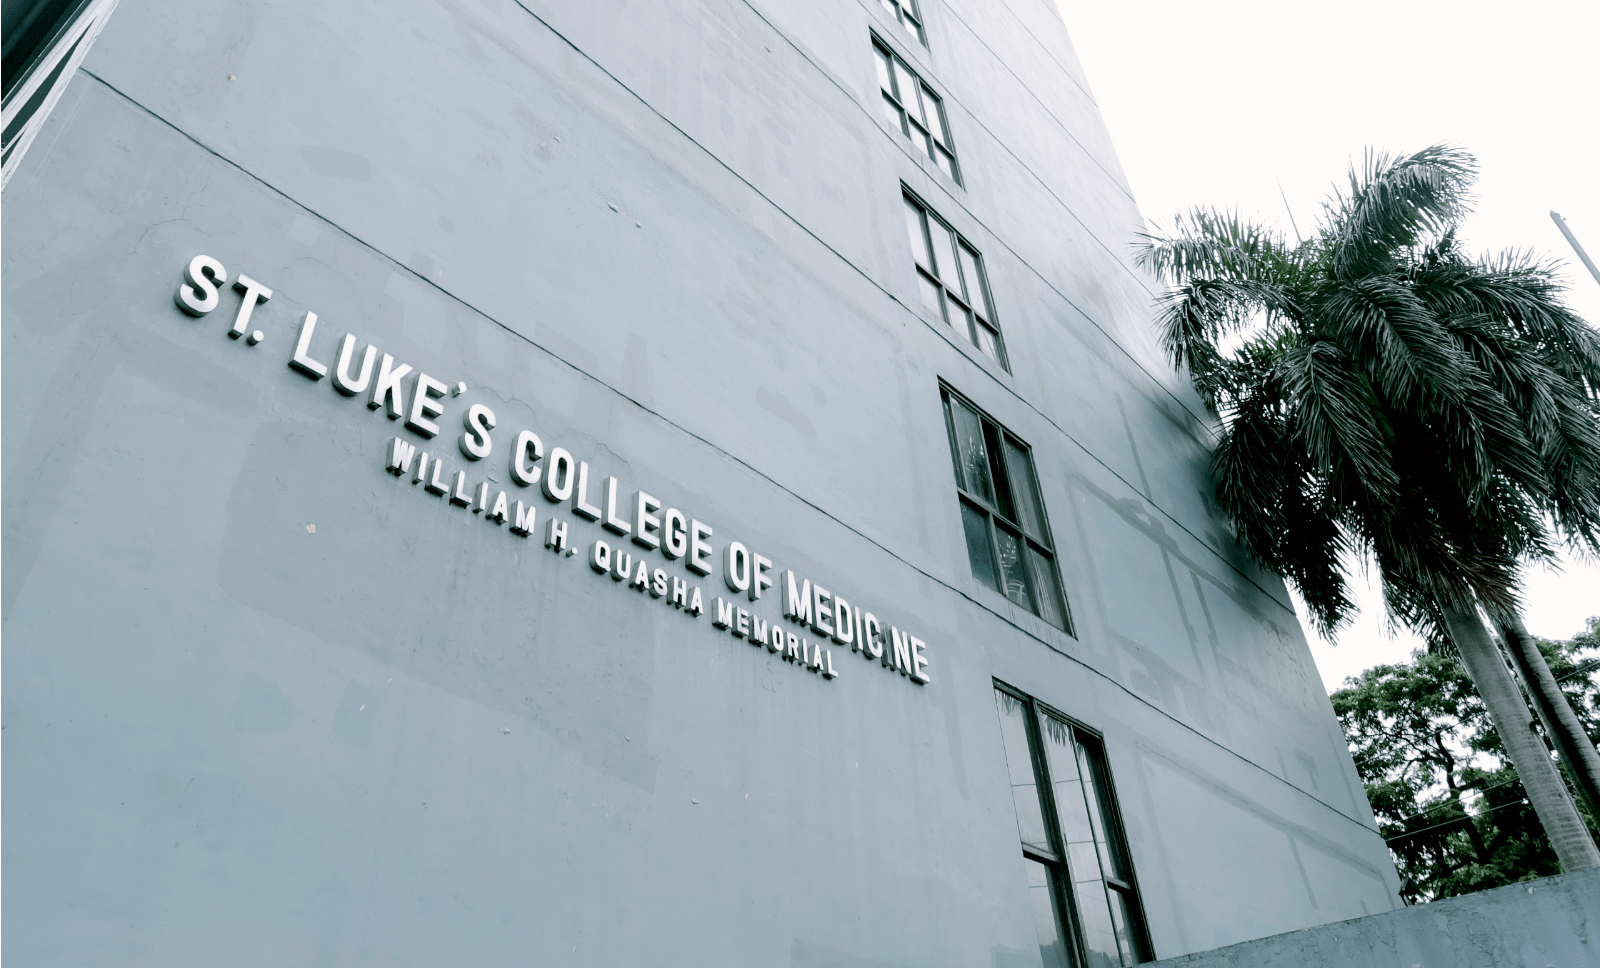 St. Luke's College of Medicine building